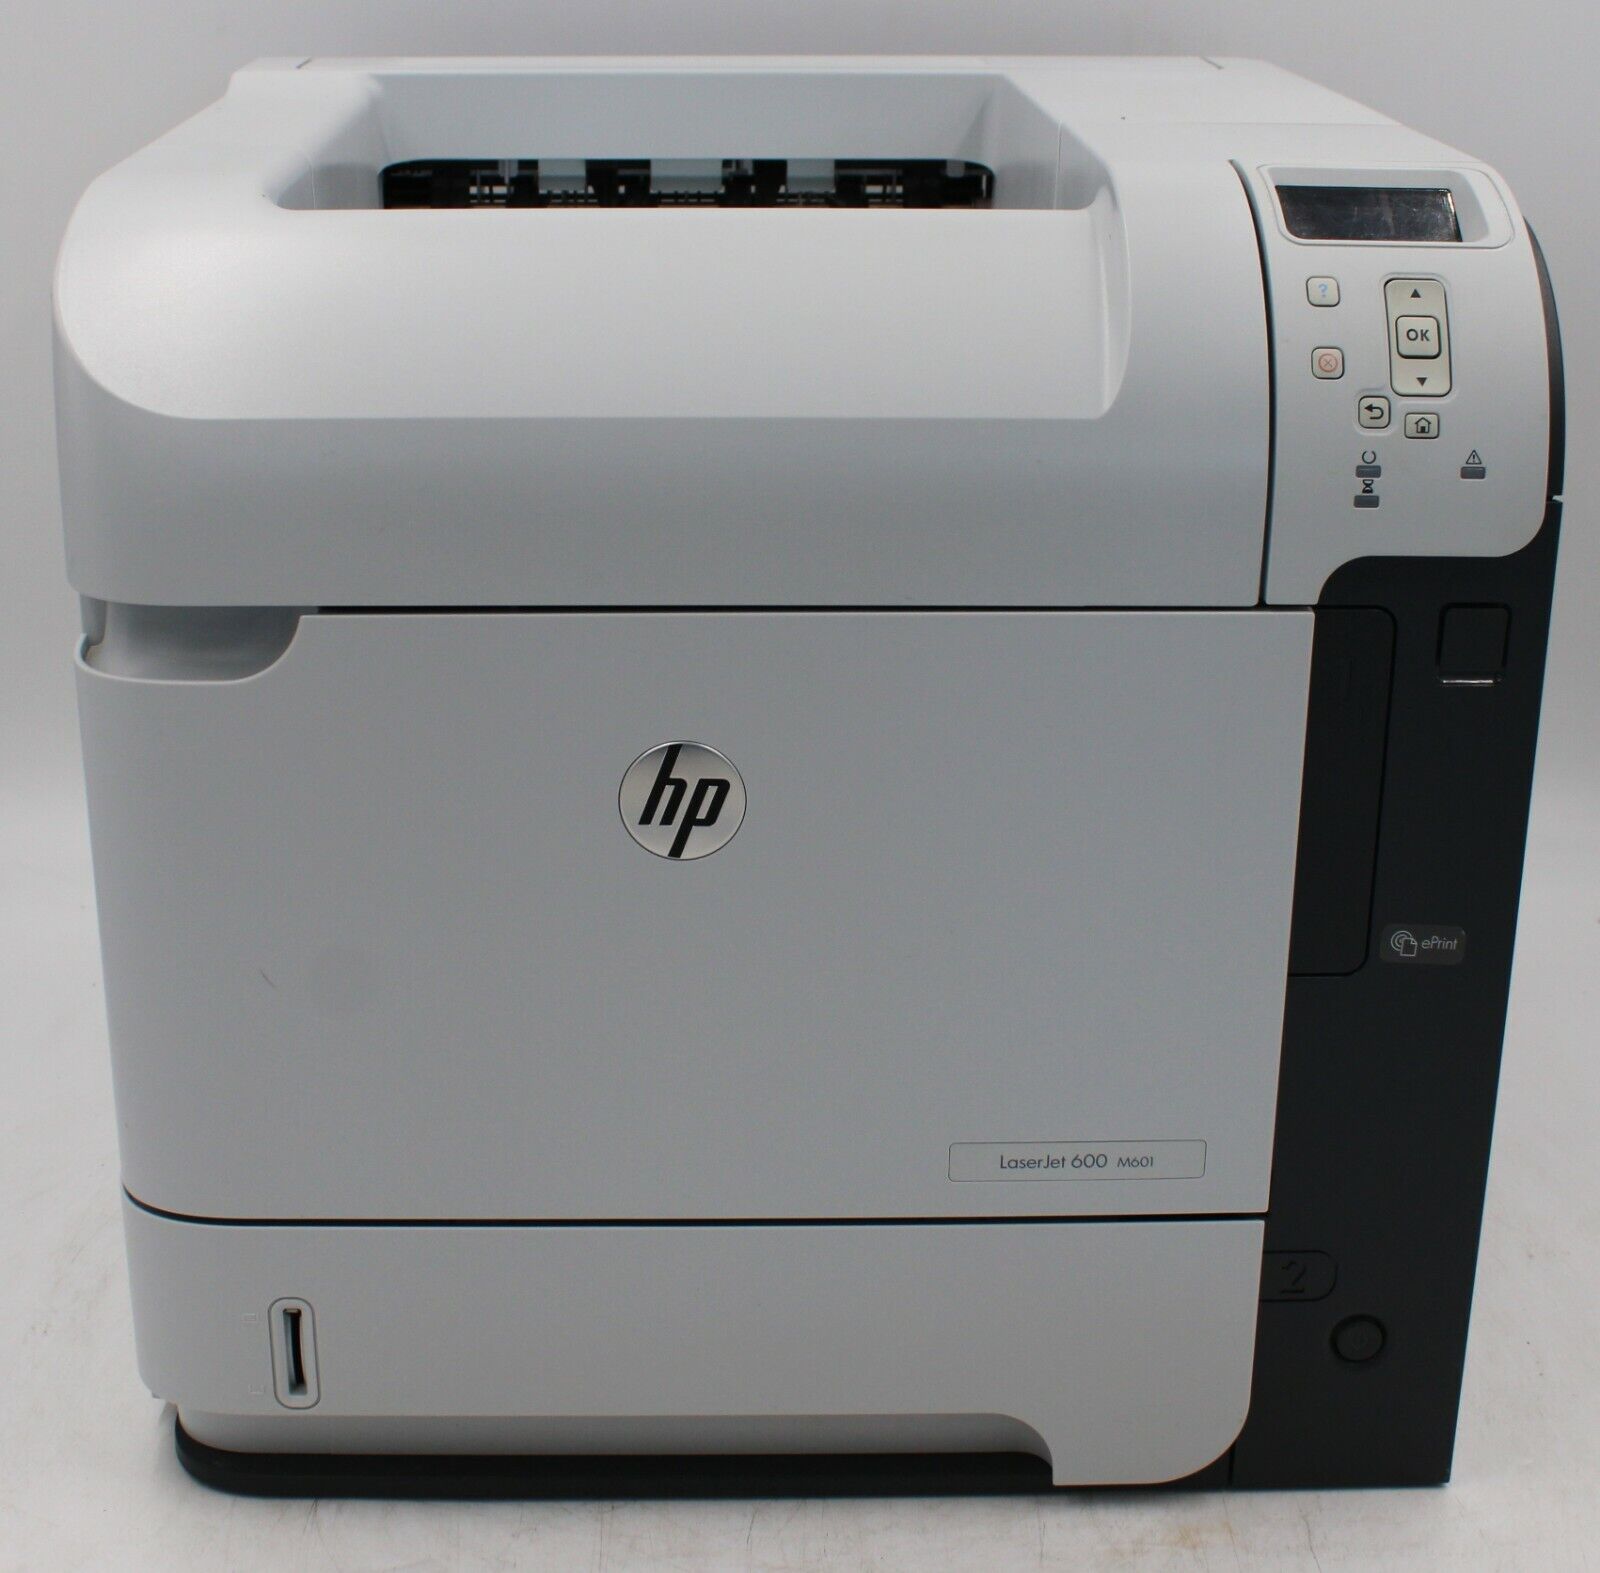 HP LaserJet 600 M601 Monochrome Workgroup Laser Printer With Toner TESTED